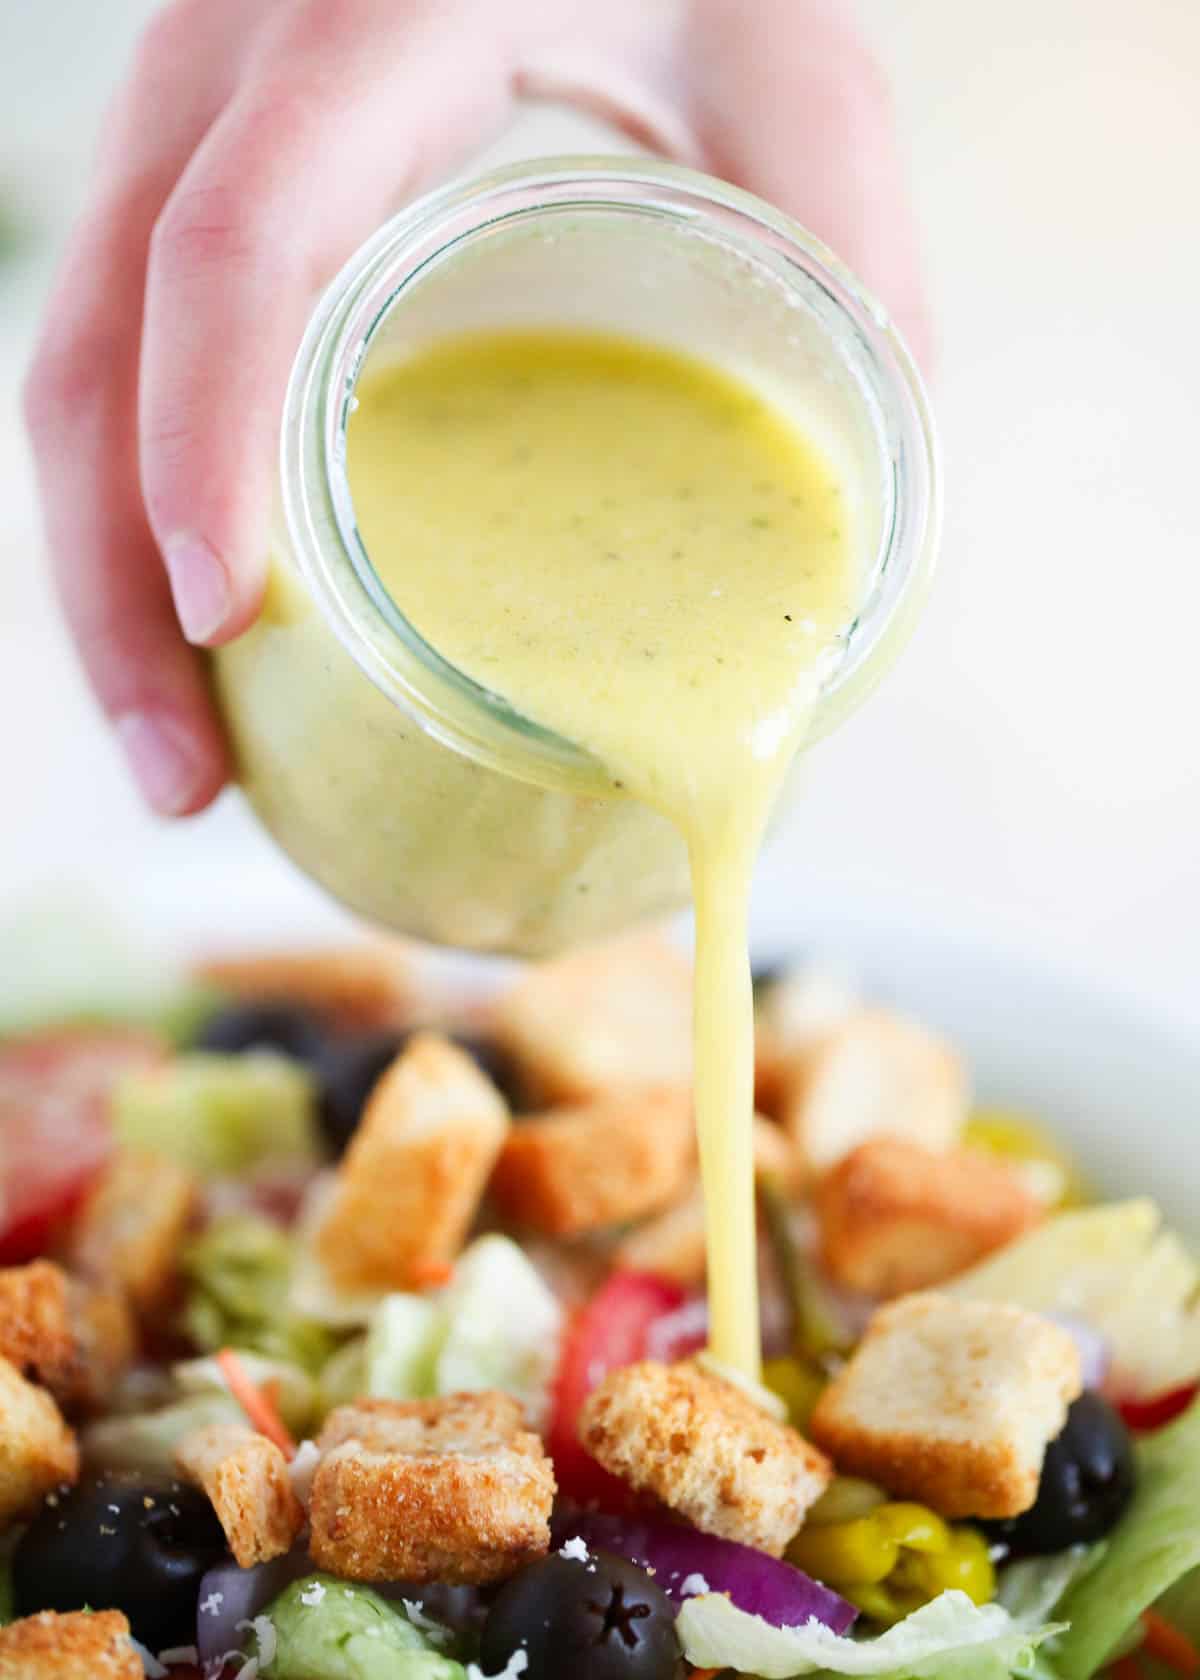 Keto Copycat Olive Garden Salad - Healthy Takeout Alternative